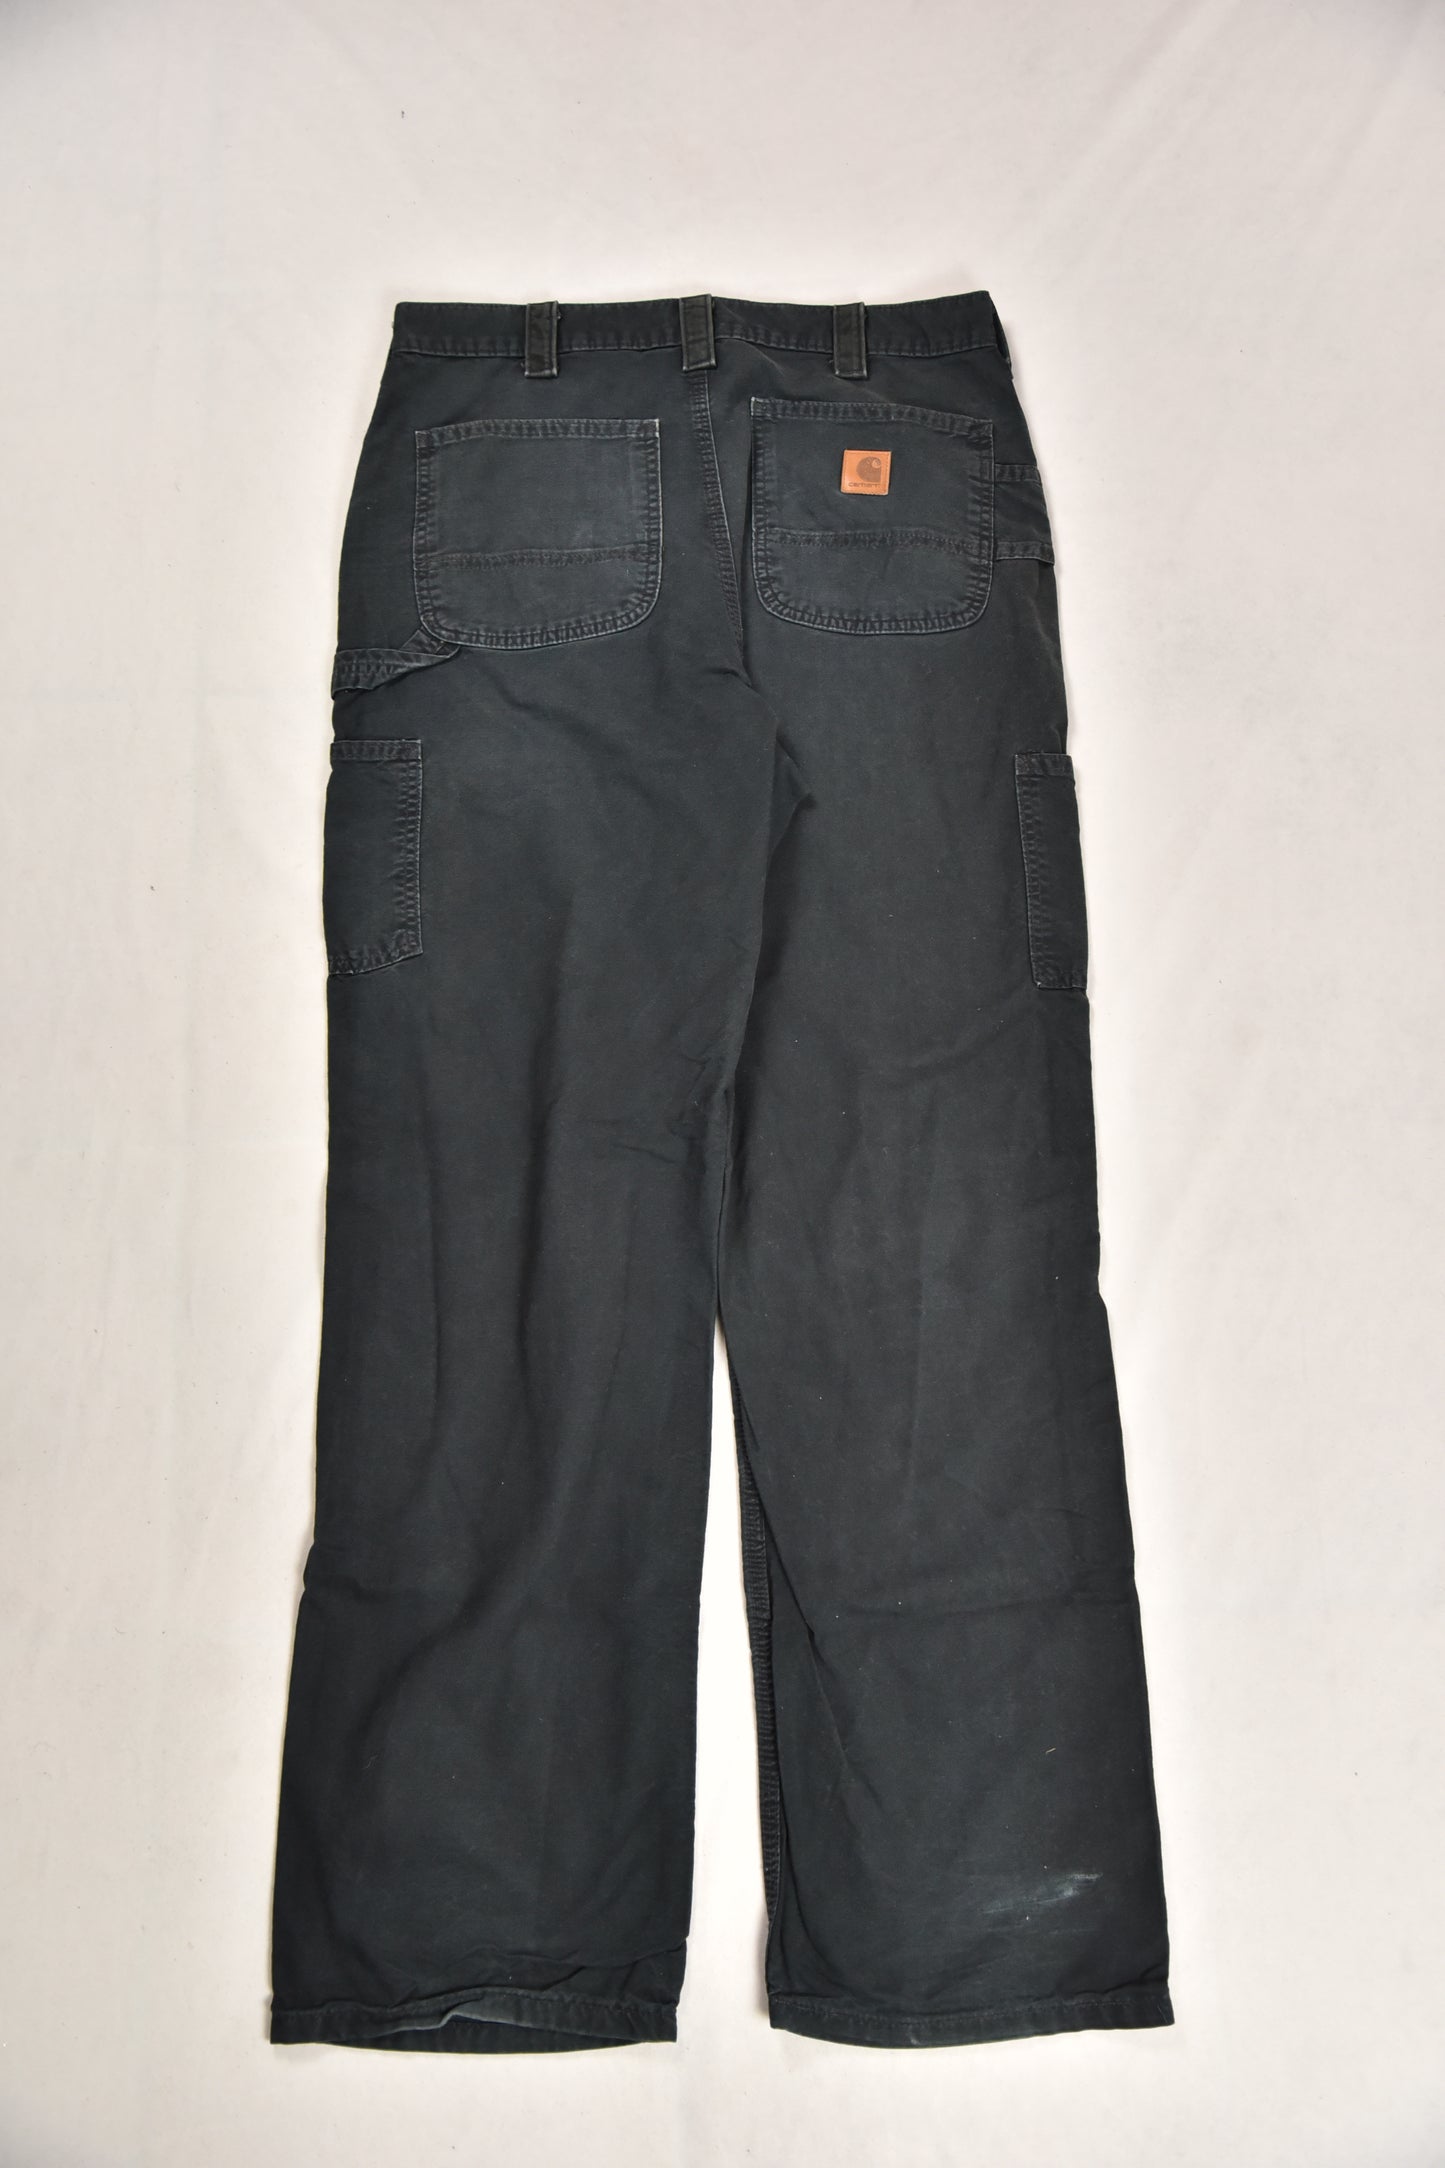 Carhartt Workwear Pants Vintage / 34x32